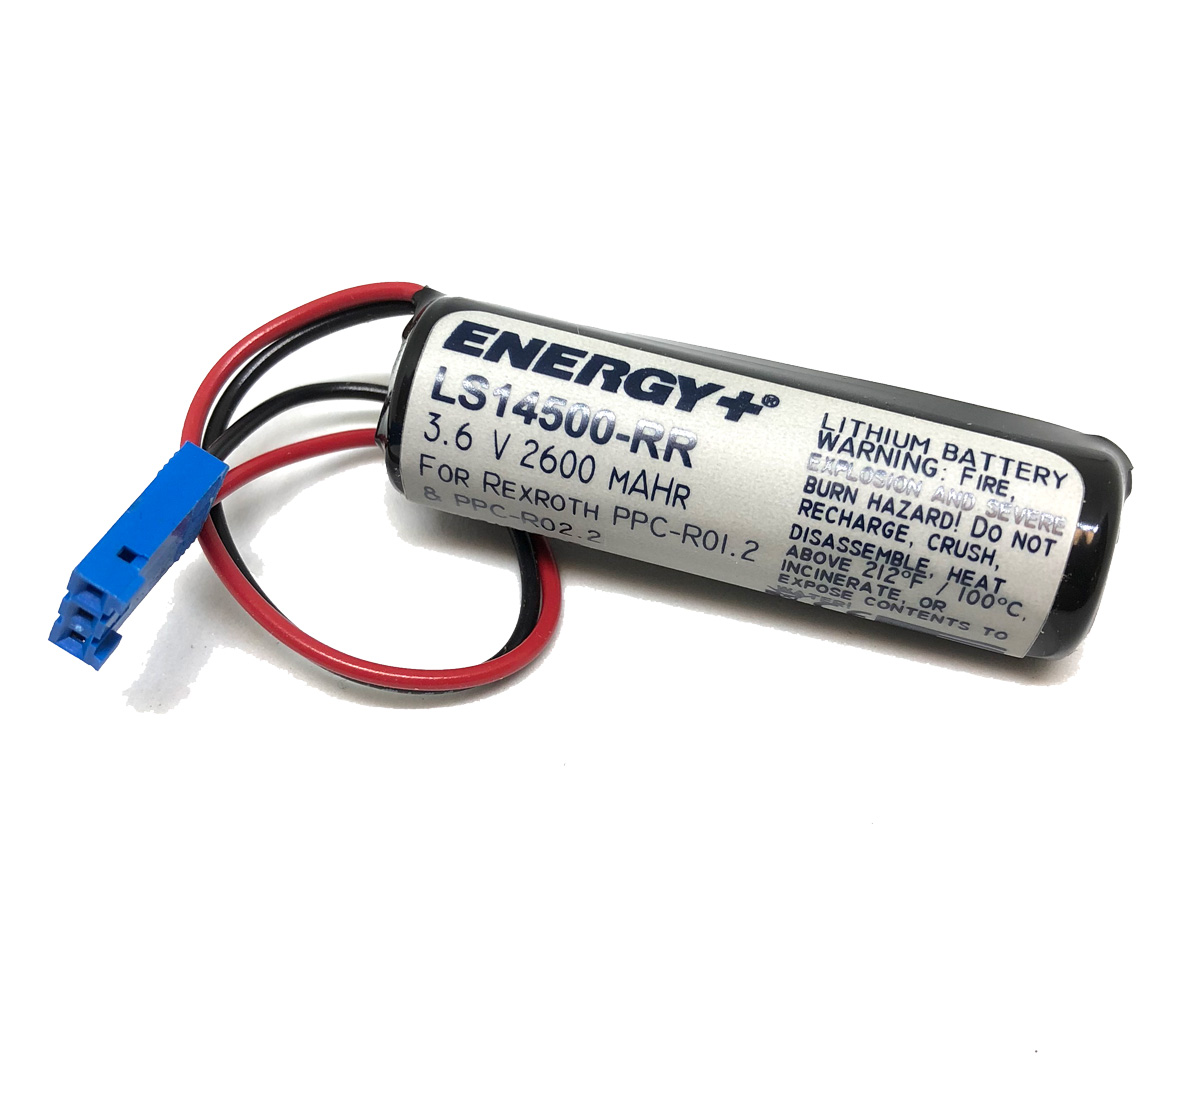 Rexroth PPC-R01.2 Controller Battery LS14500-RR